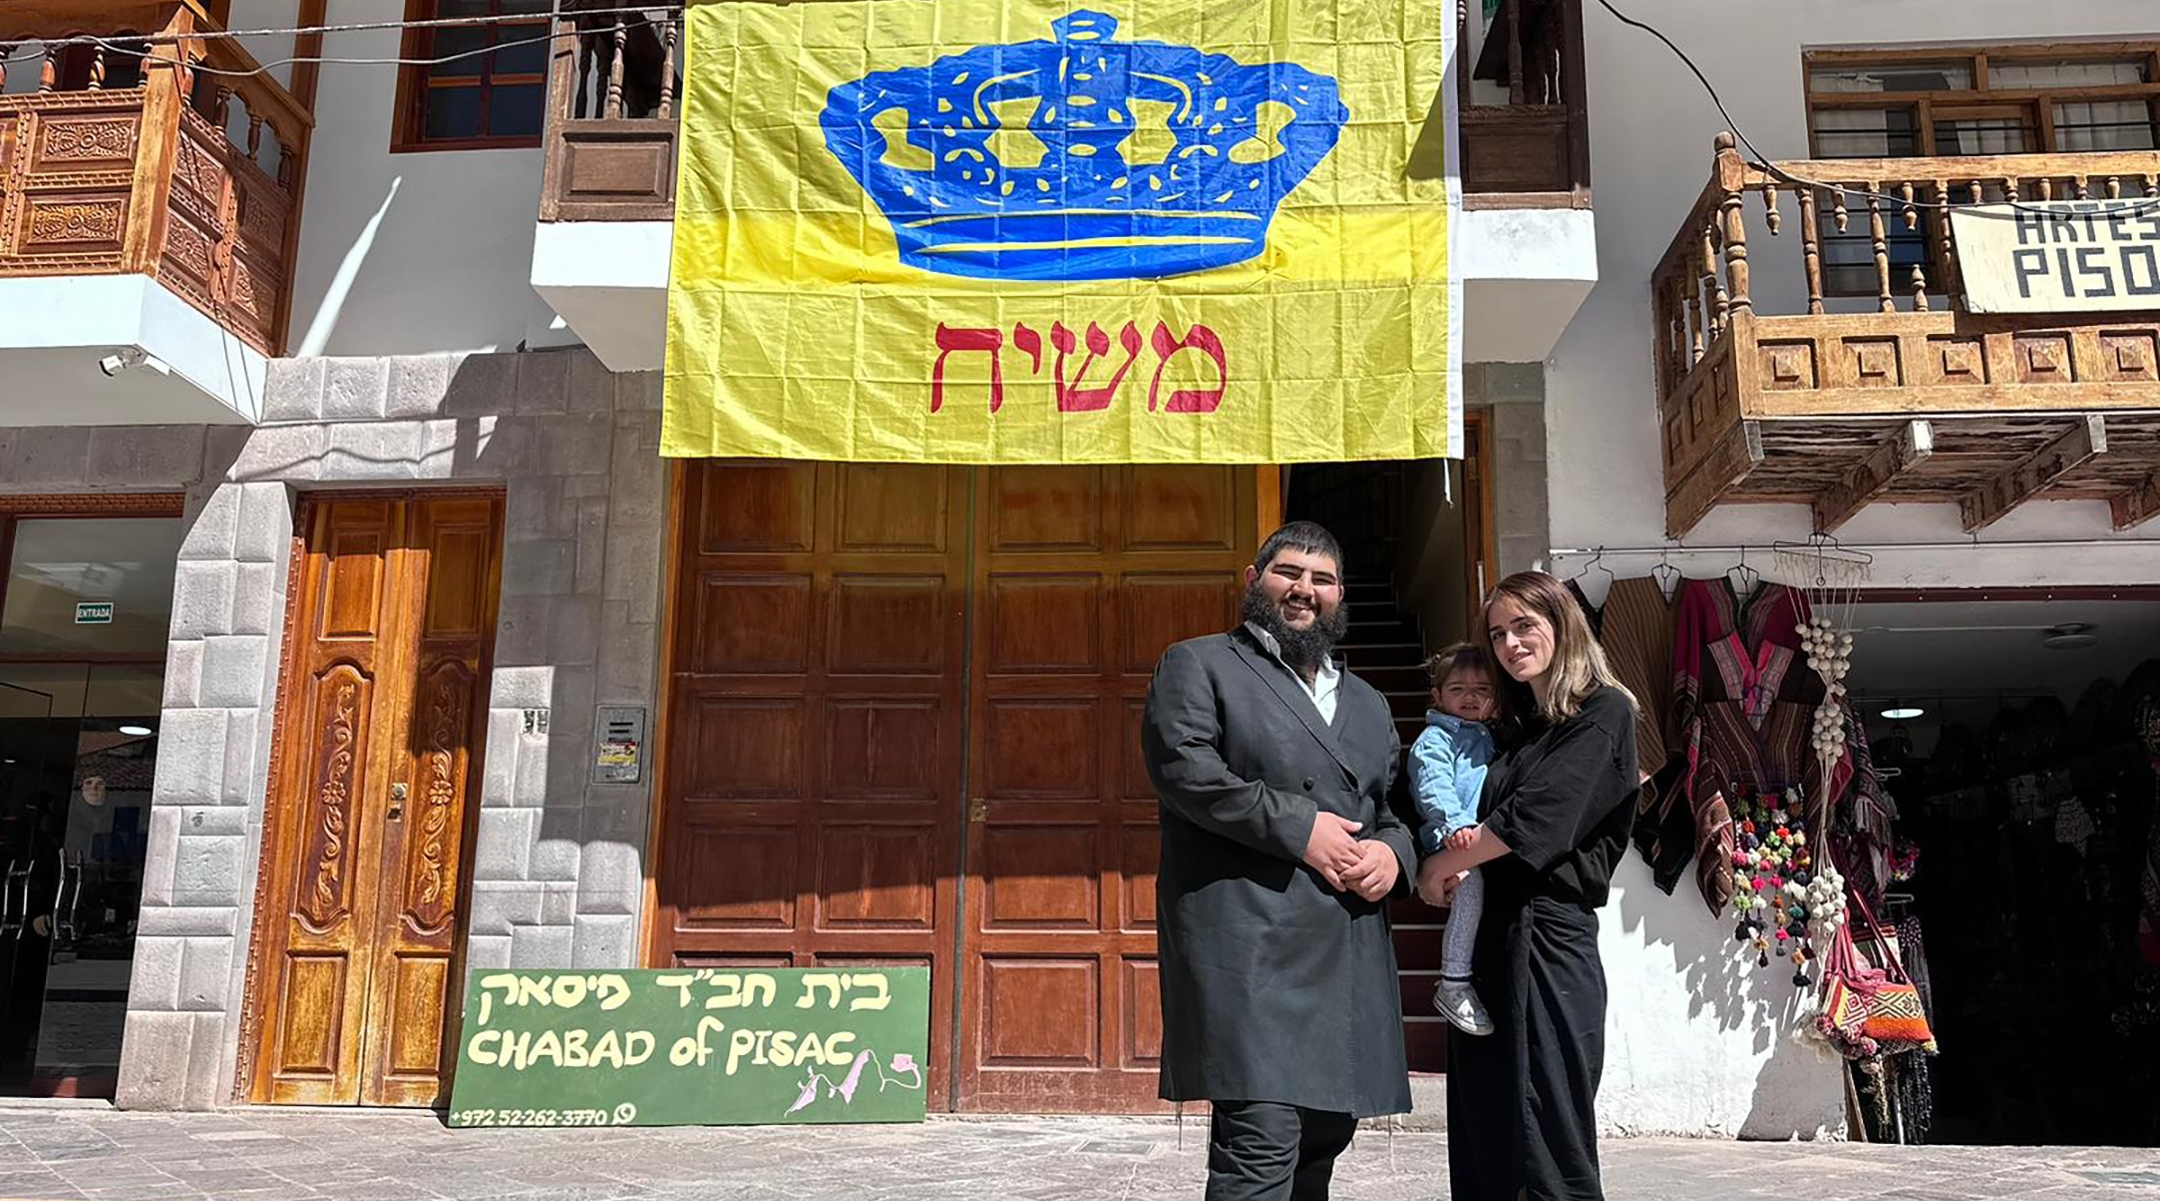 Rabbi Ariel Kadosh and his wife Talia lead the Chabad in Pisac, Peru. 